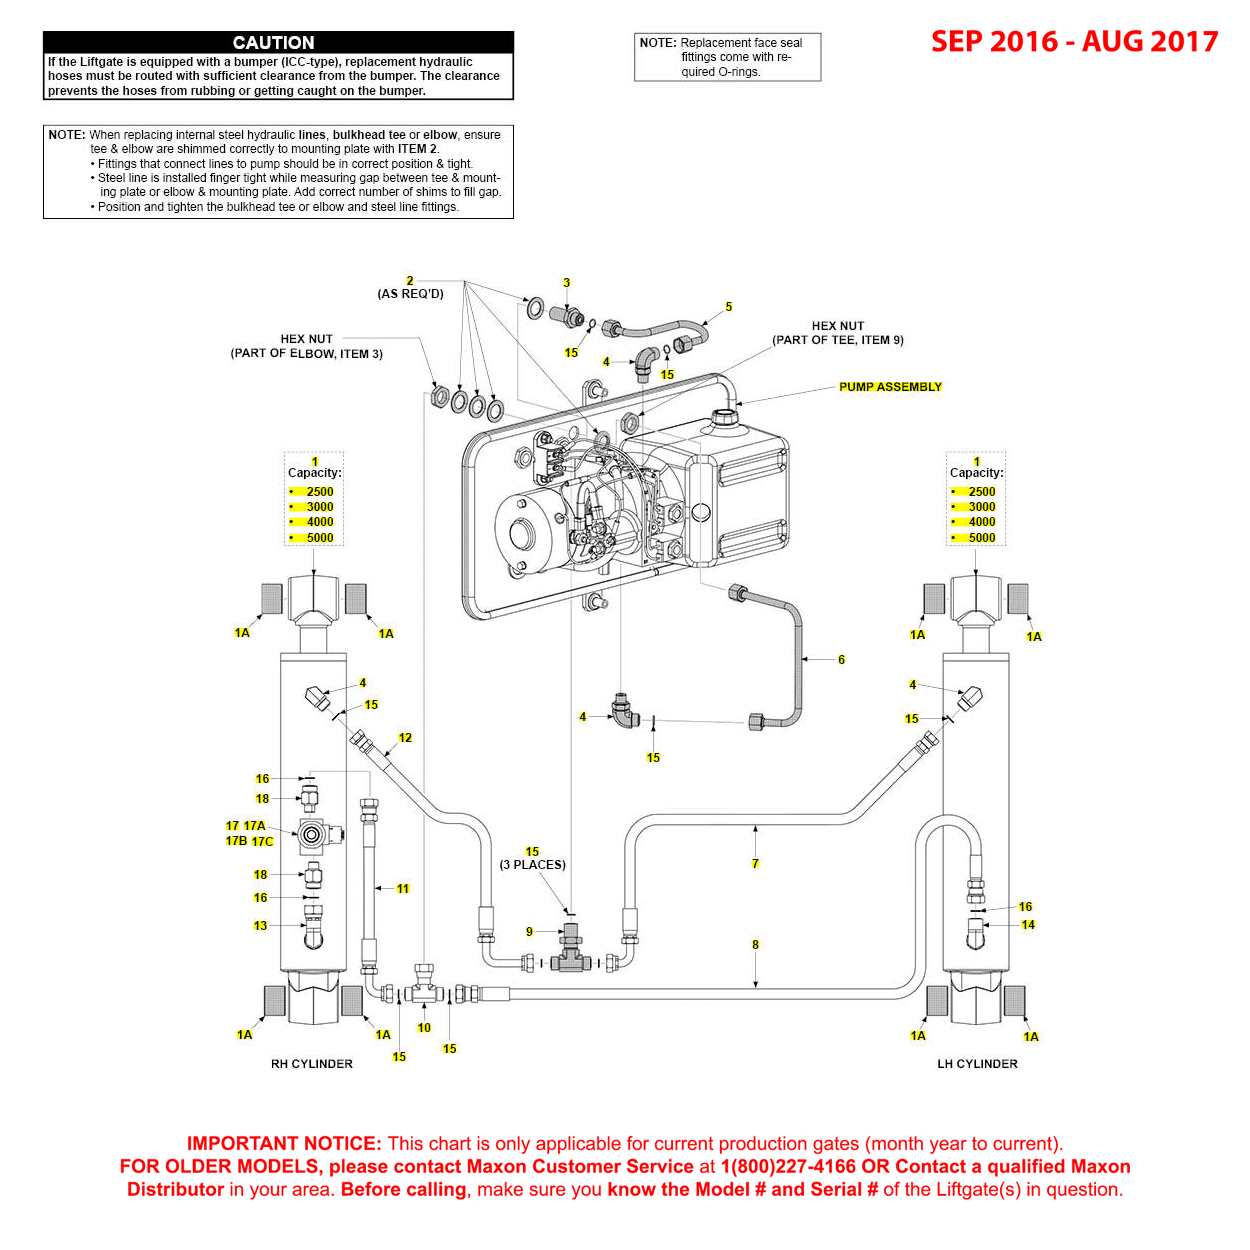 Maxon GPT (Sep 2016 - Aug 2017) Power Down Hydraulic Systems Diagram